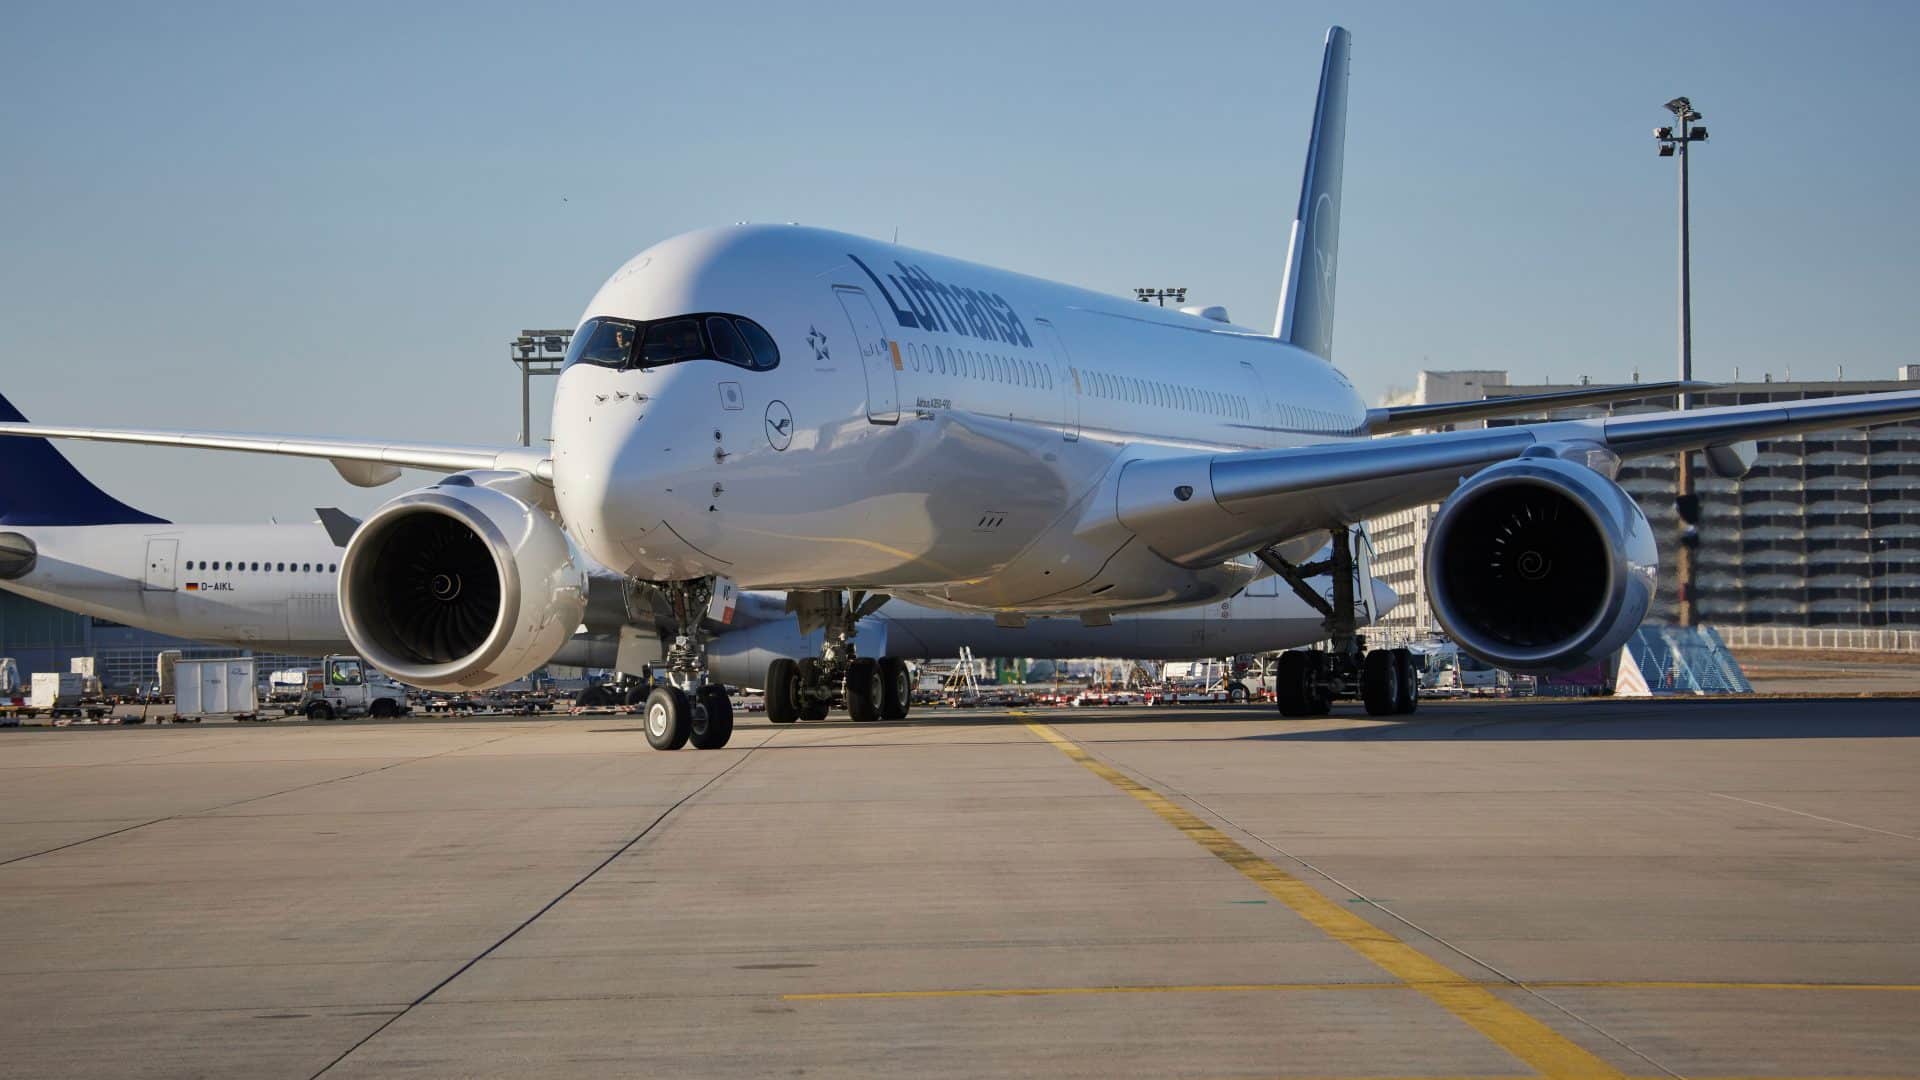 Offiziell-Lufthansa-bernimmt-ITA-Airways